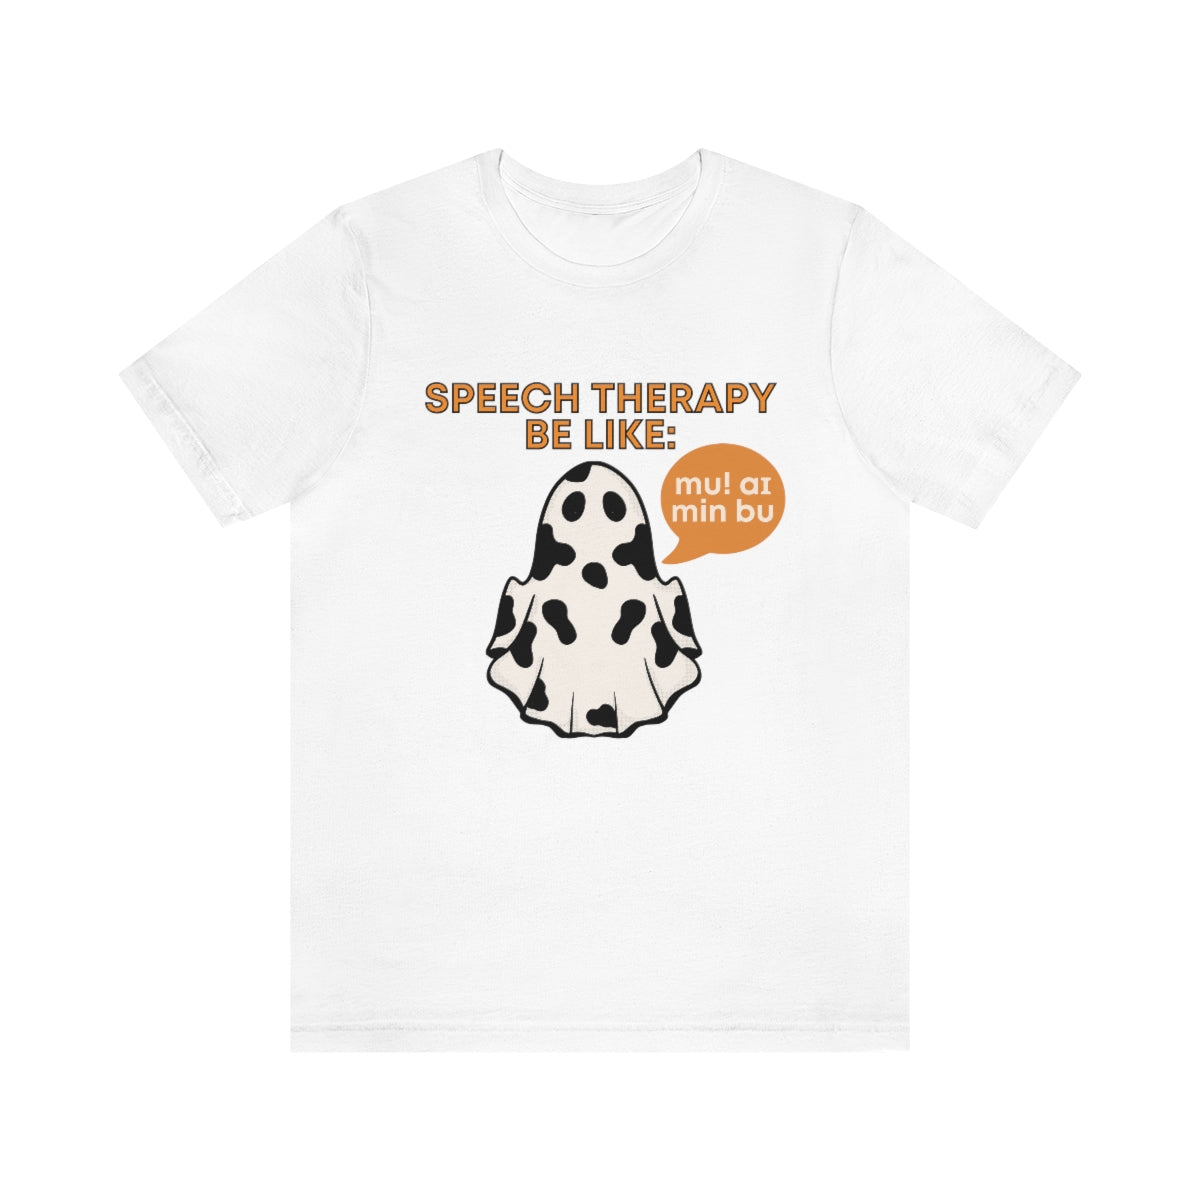 Speech Therapy Be Like: Moo I Mean Boo (IPA) Tee